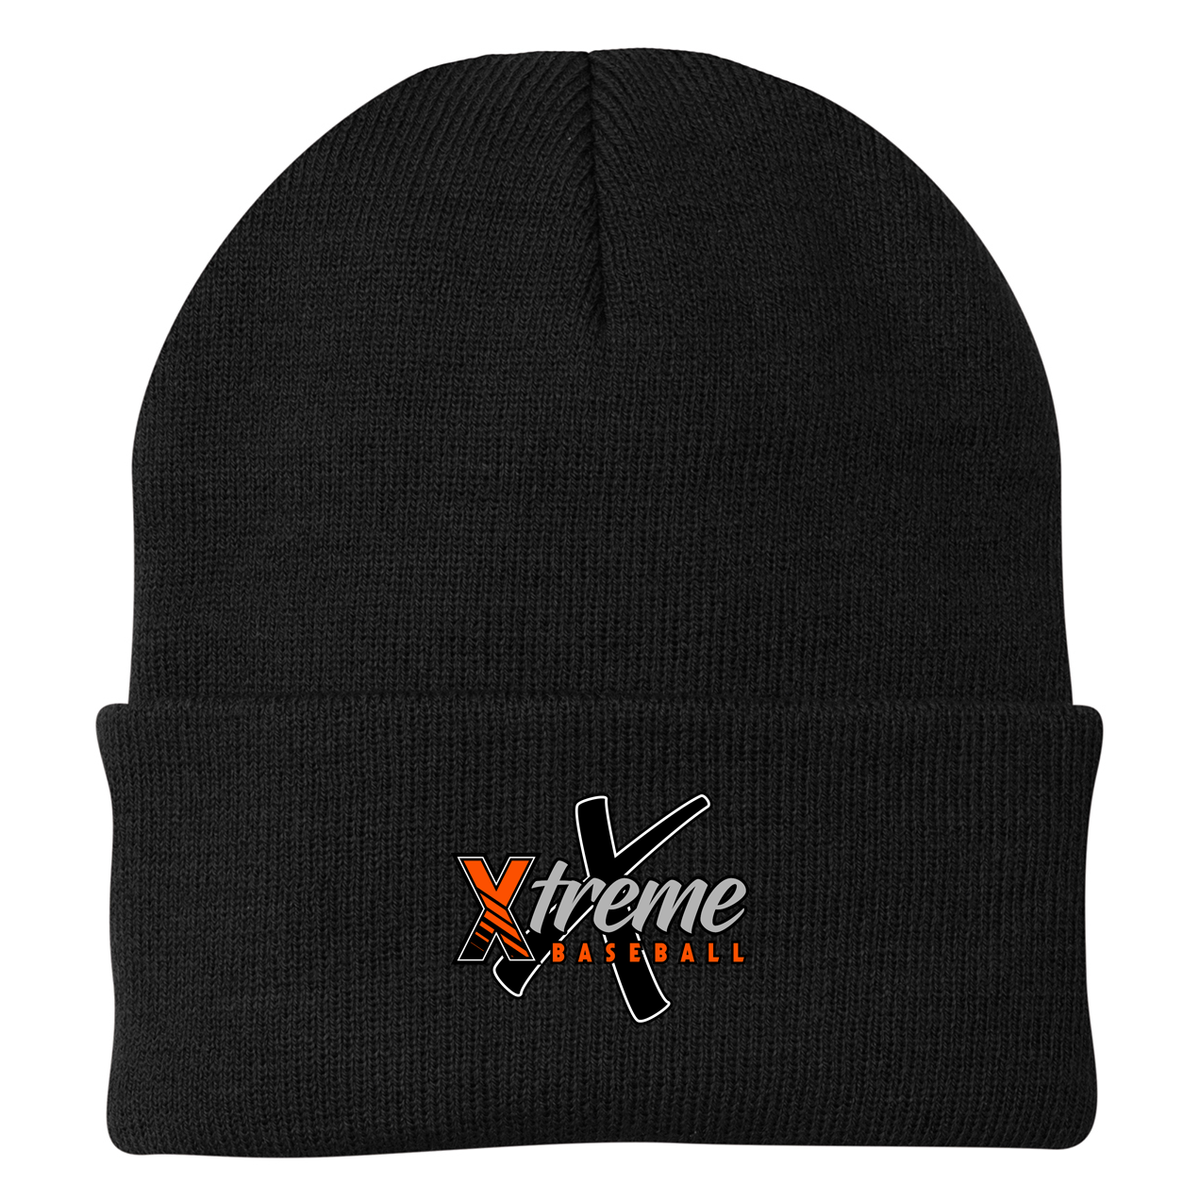 Xtreme Baseball Knit Beanie